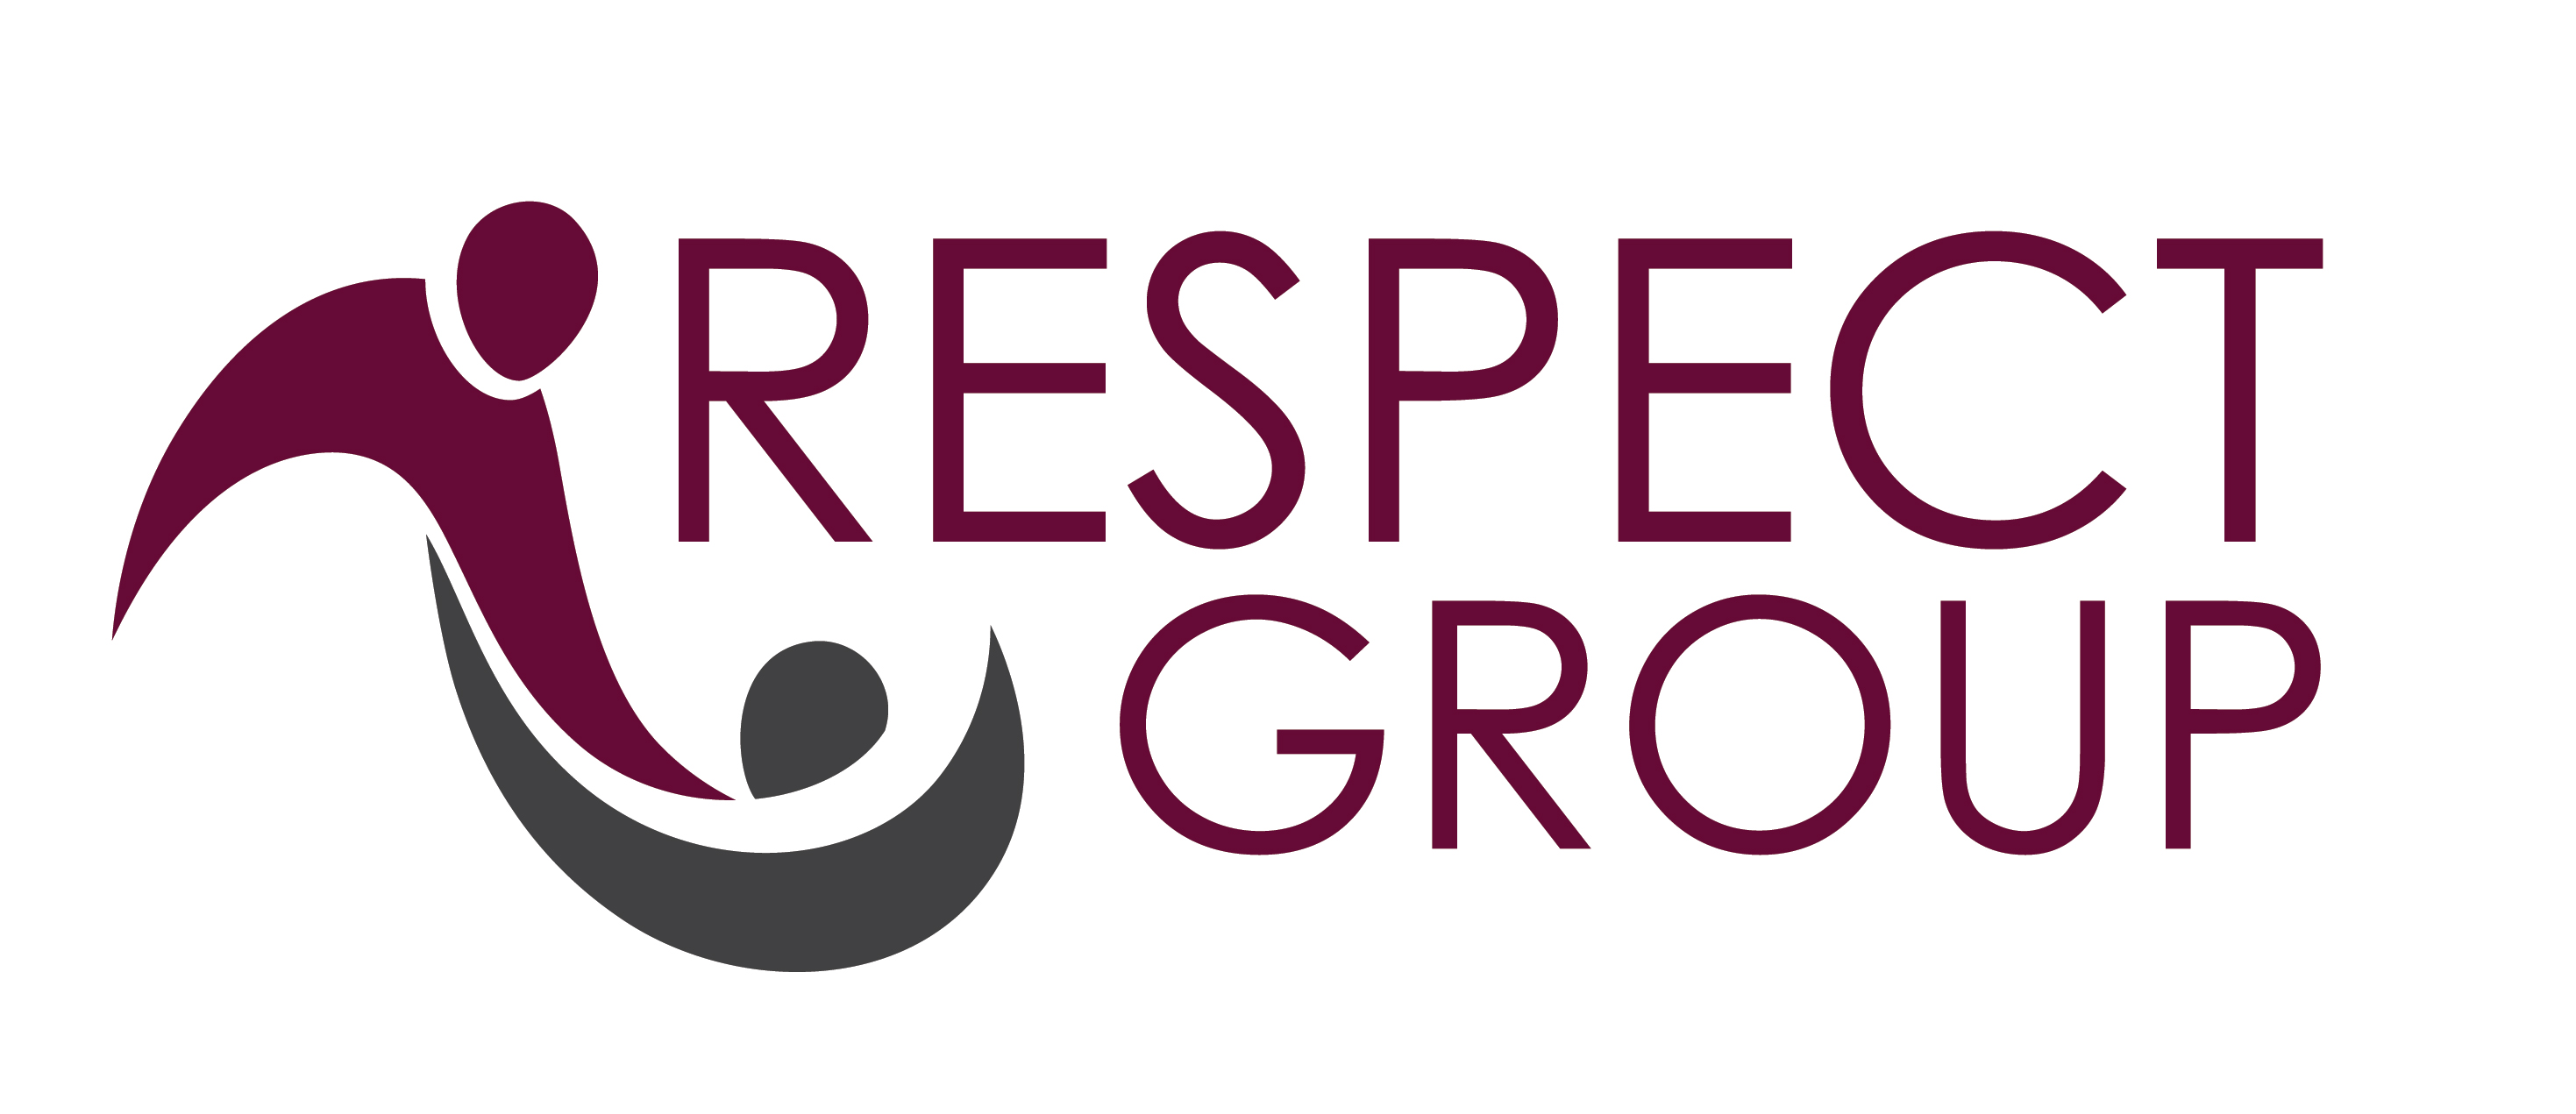 The Respect Group Logo